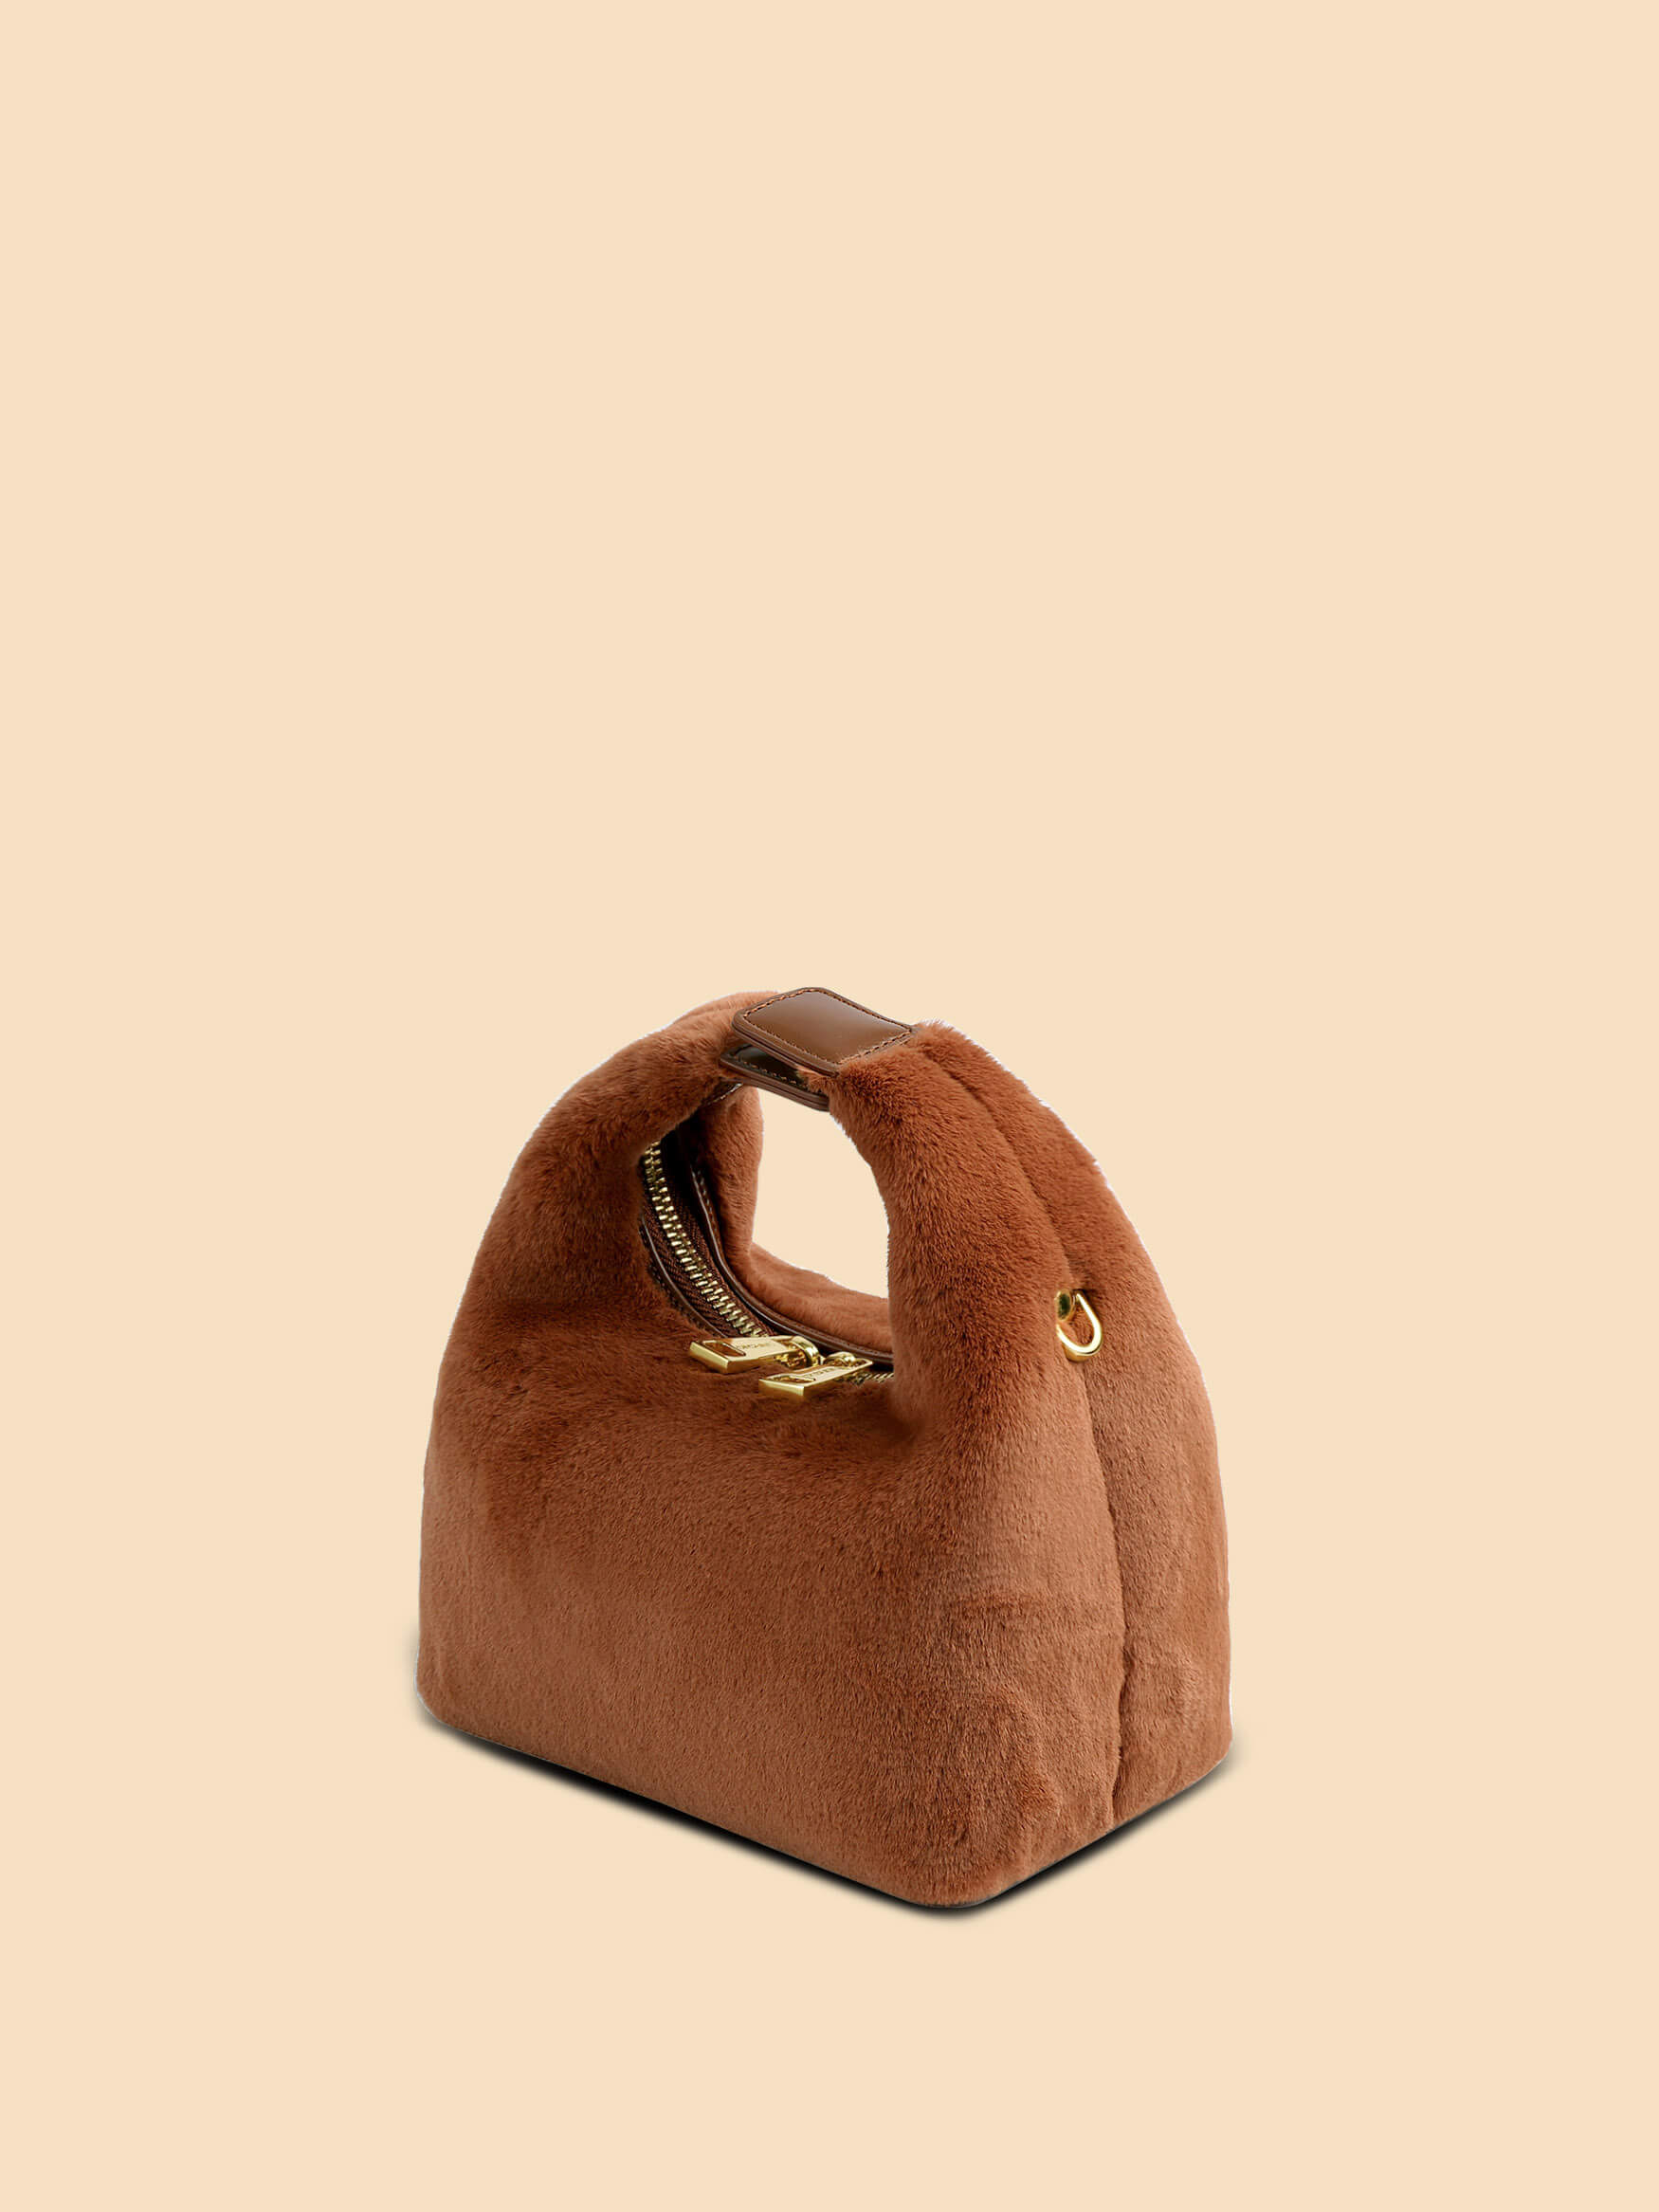 SINBONO Vienna Toffee Leather Handbags -Vegan Leather Women Bag